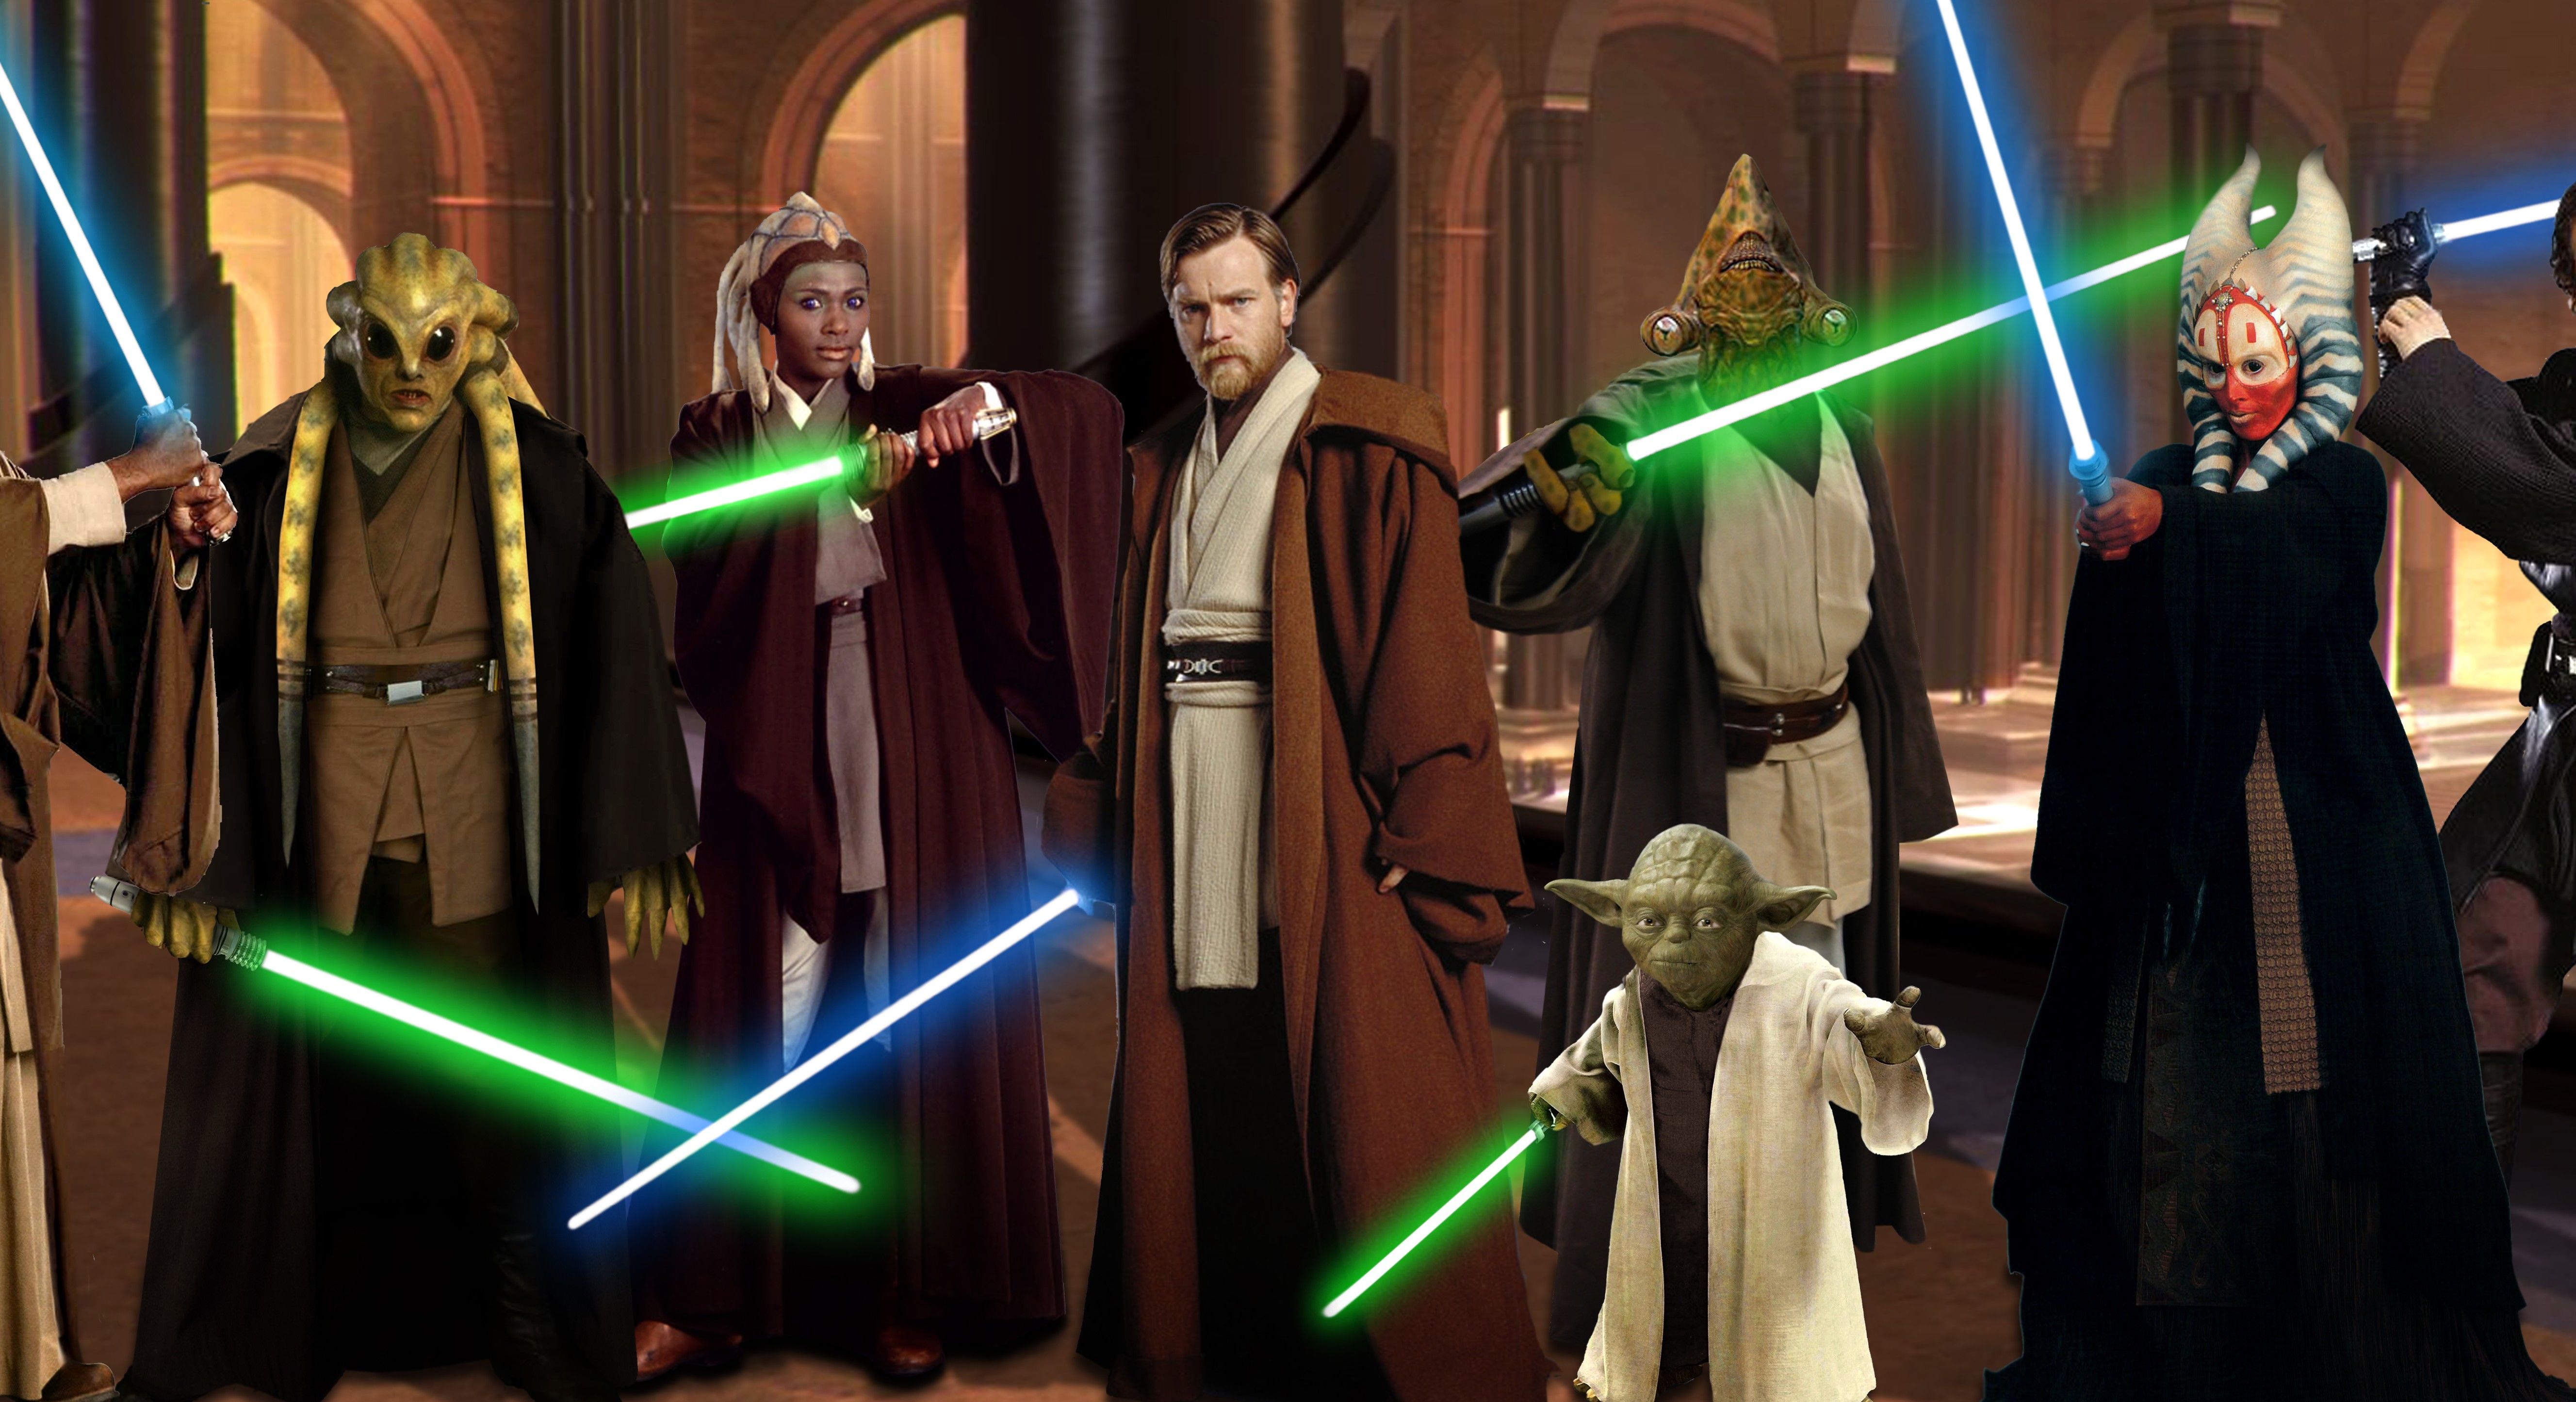 Name the Star Wars Jedi